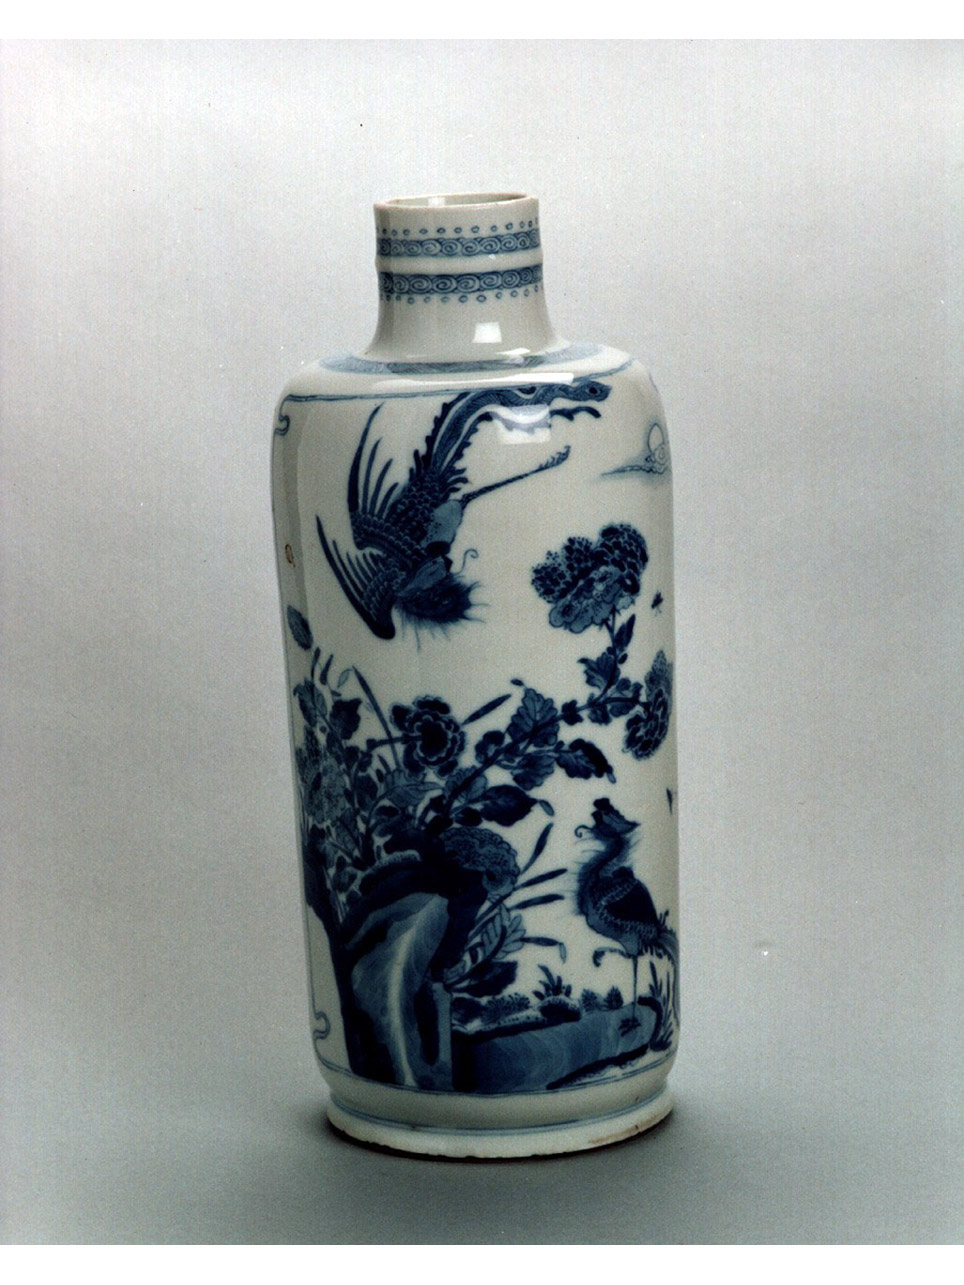 motivi decorativi vegetali e animali (vaso) - manifattura cinese (prima metà sec. XVIII)